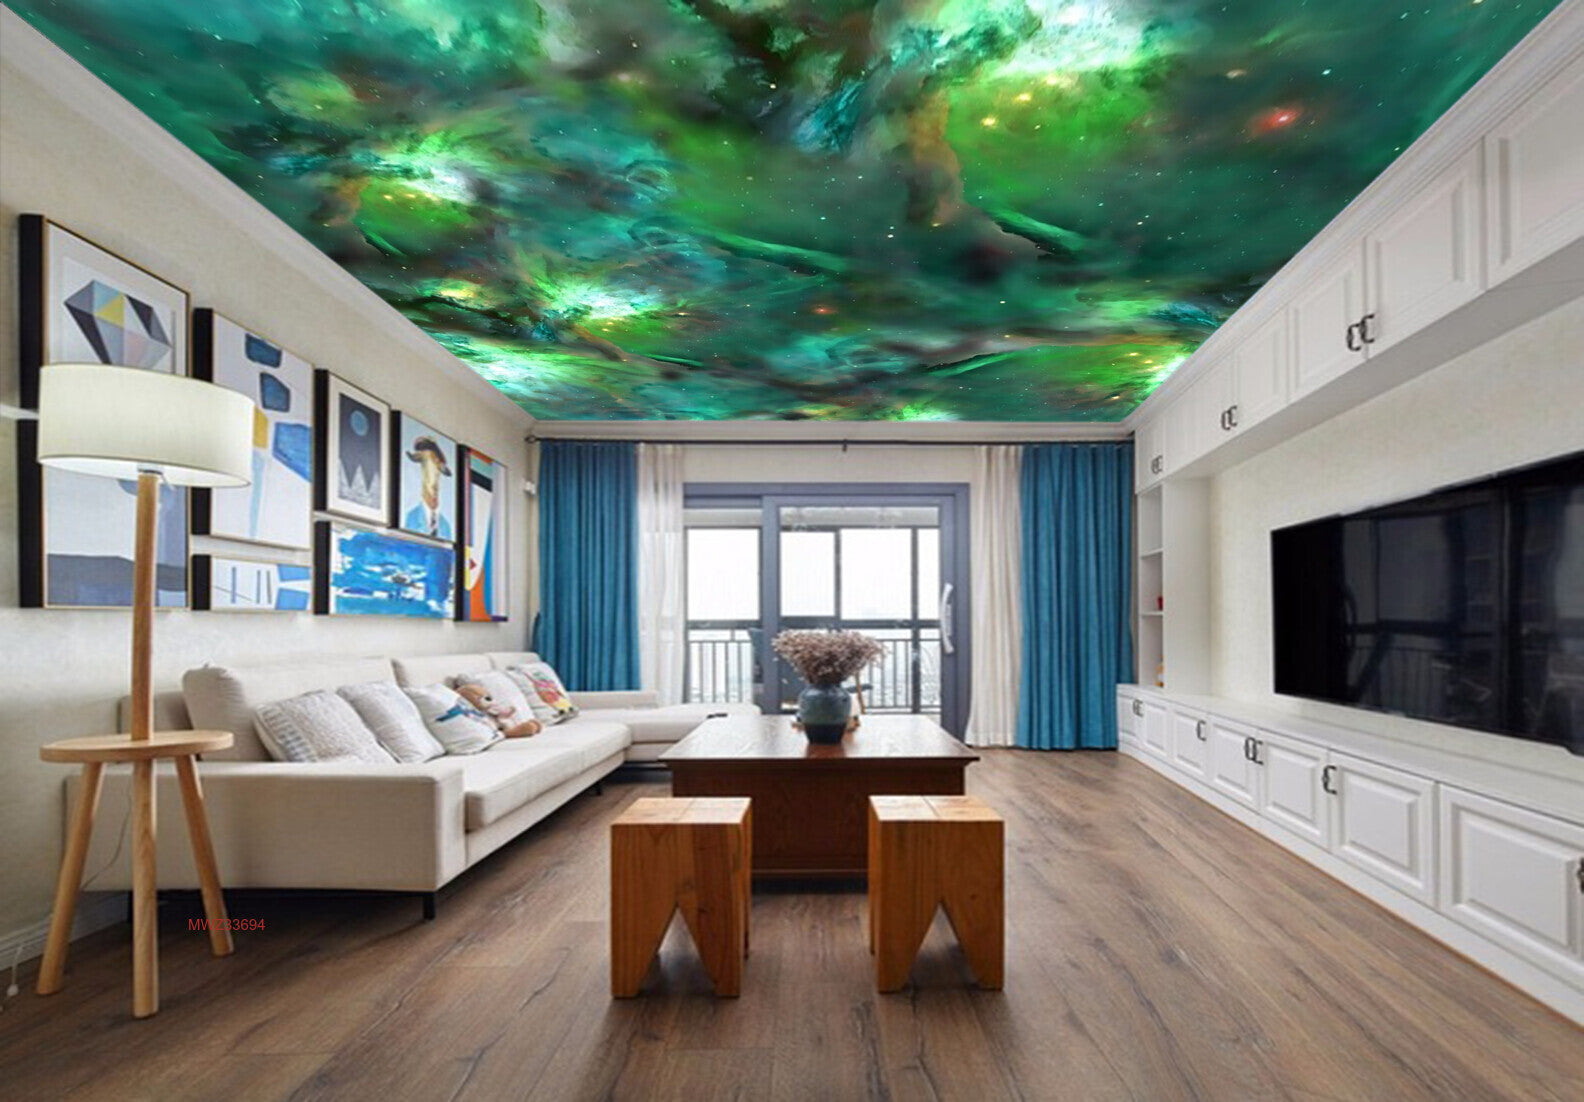 Avikalp MWZ3369 Green Black Solar System HD Wallpaper for Ceiling